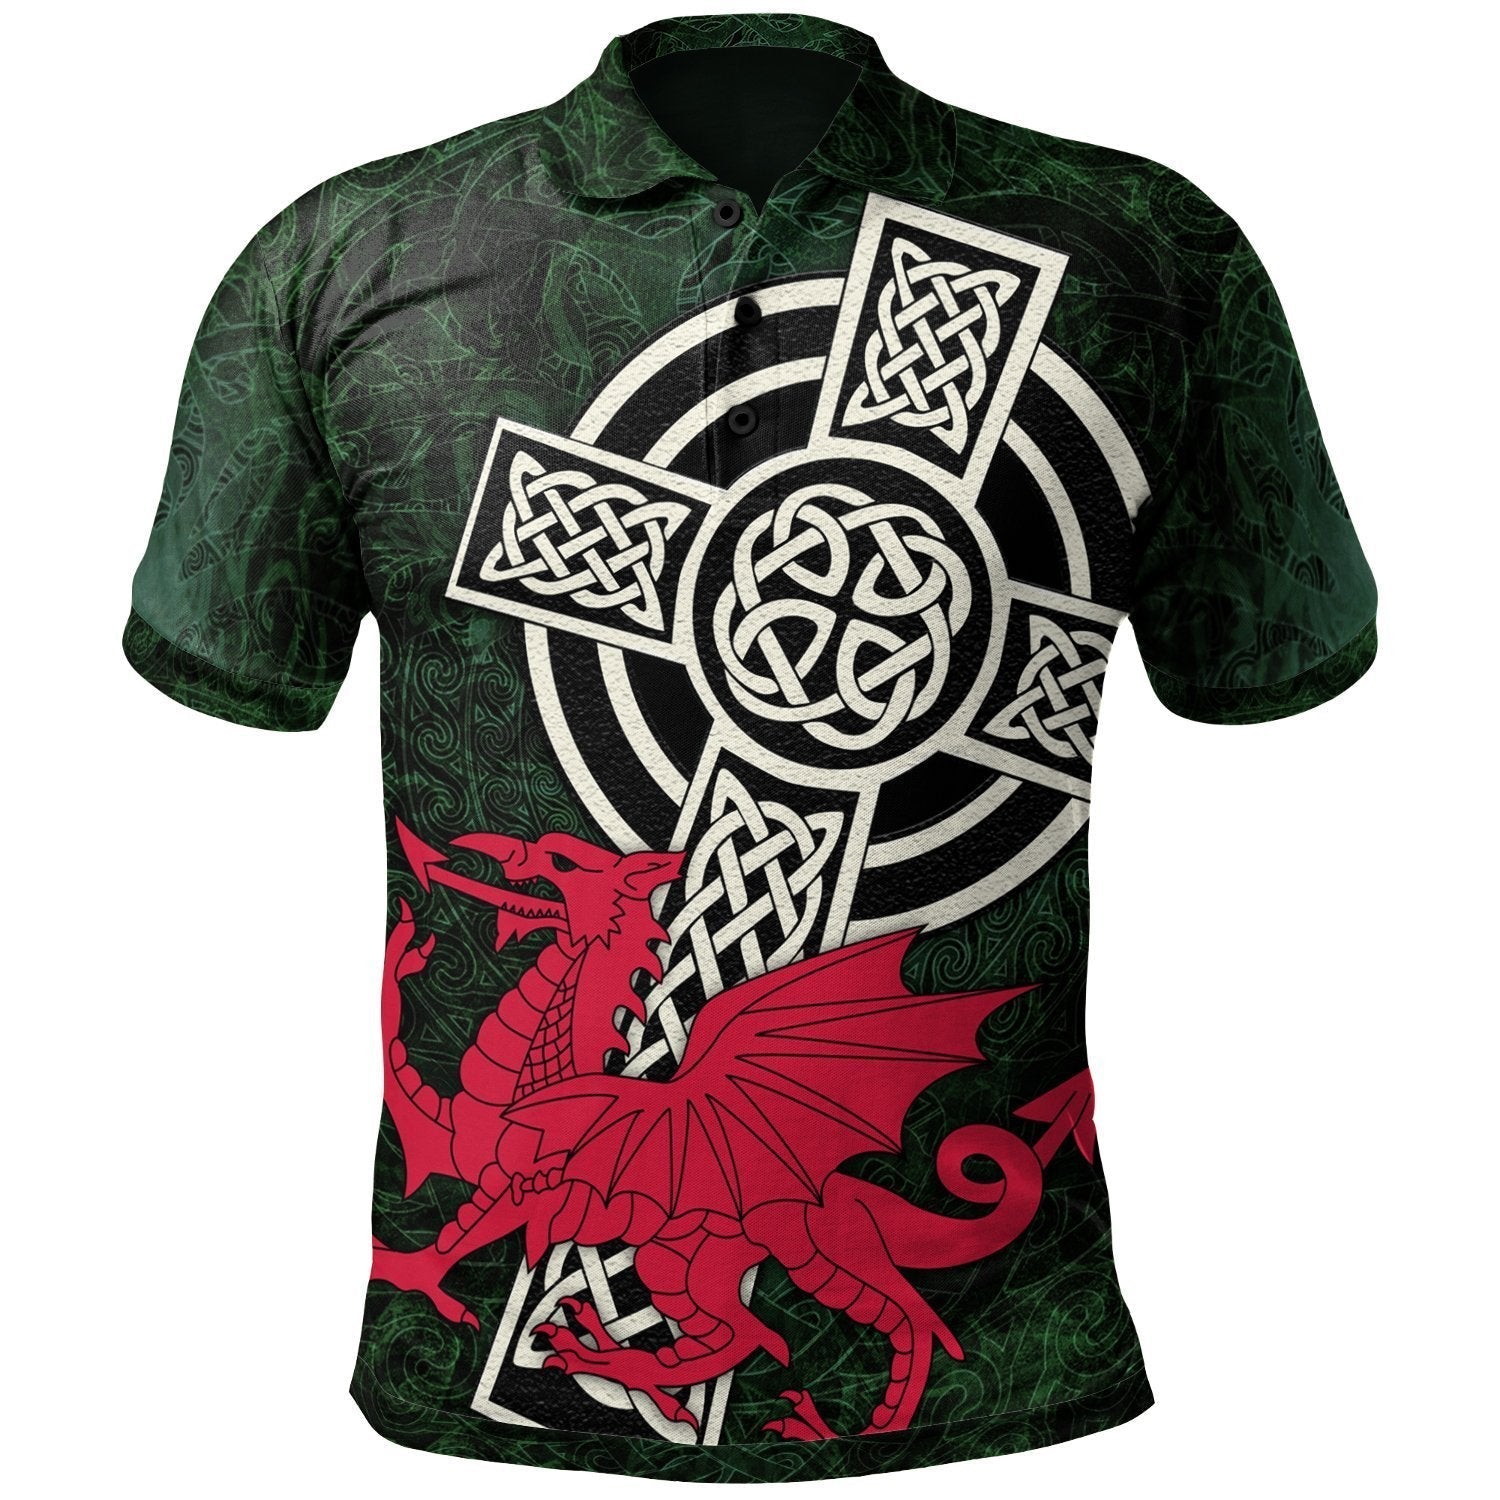 wales-celtic-polo-shirt-celtic-cross-and-cymru-skew-style